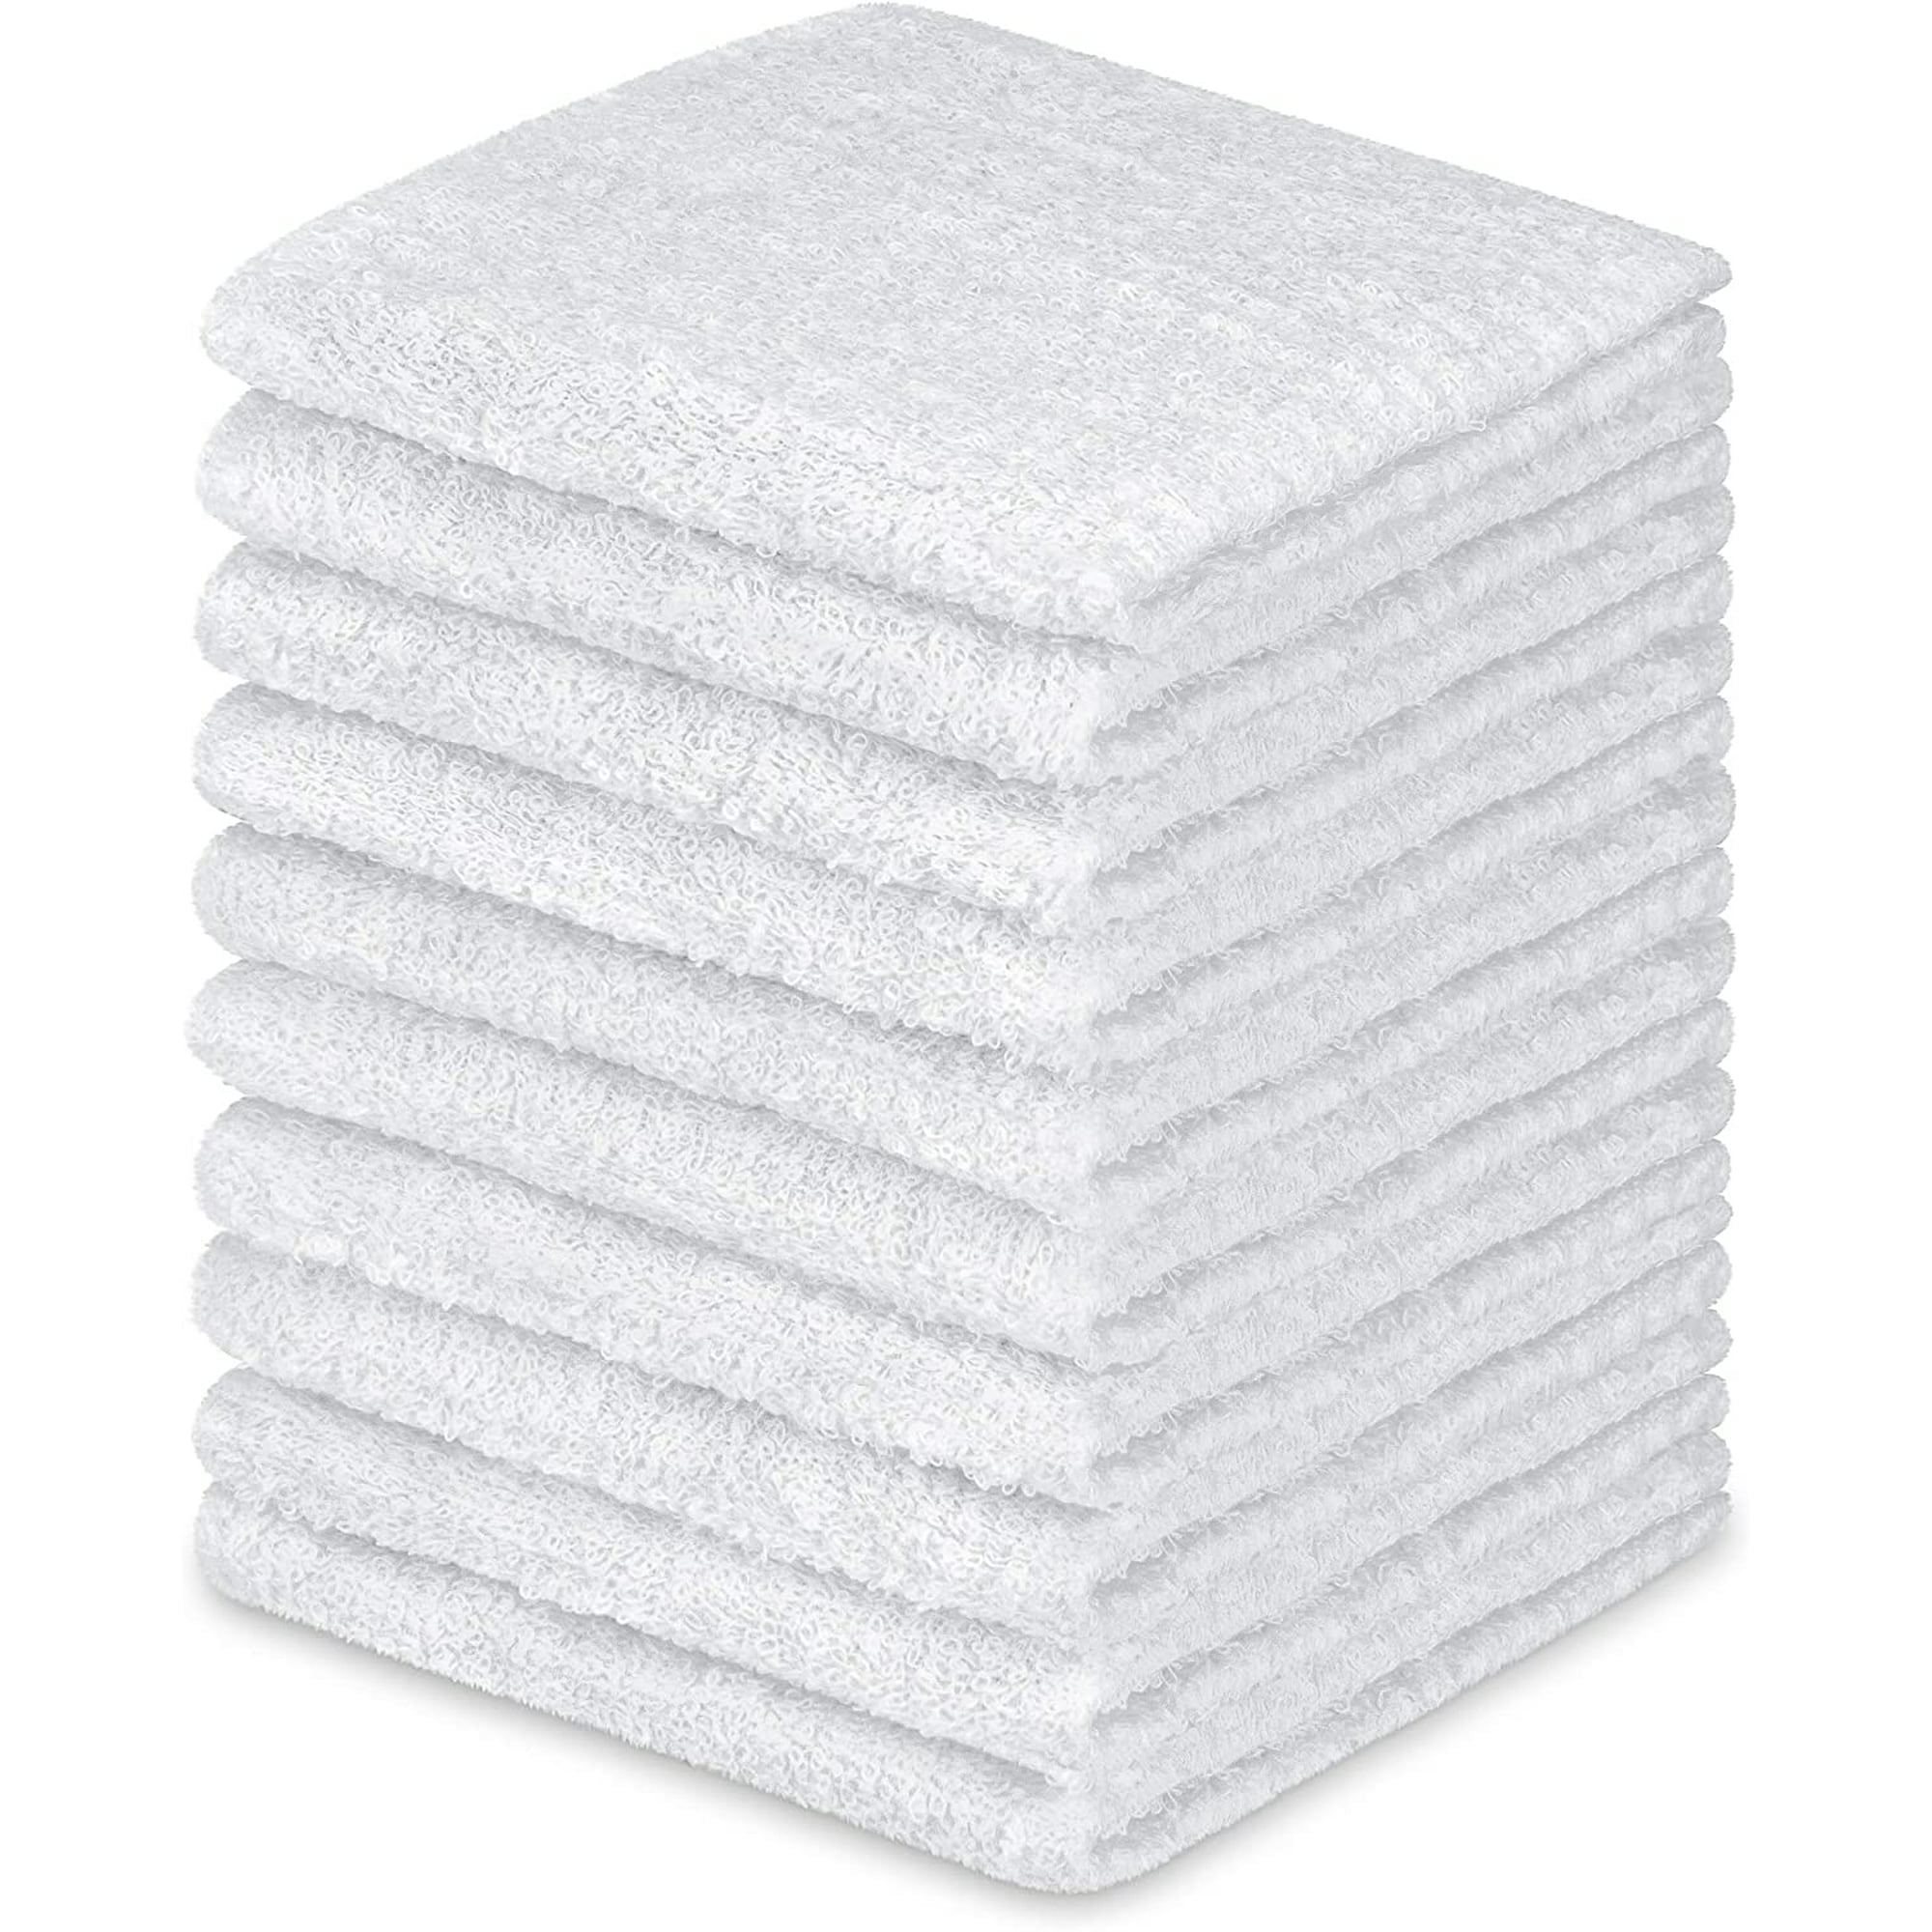 12 Pack White Wash Cloths 100% Cotton For Bathroom & Kitchen 12 x 12 